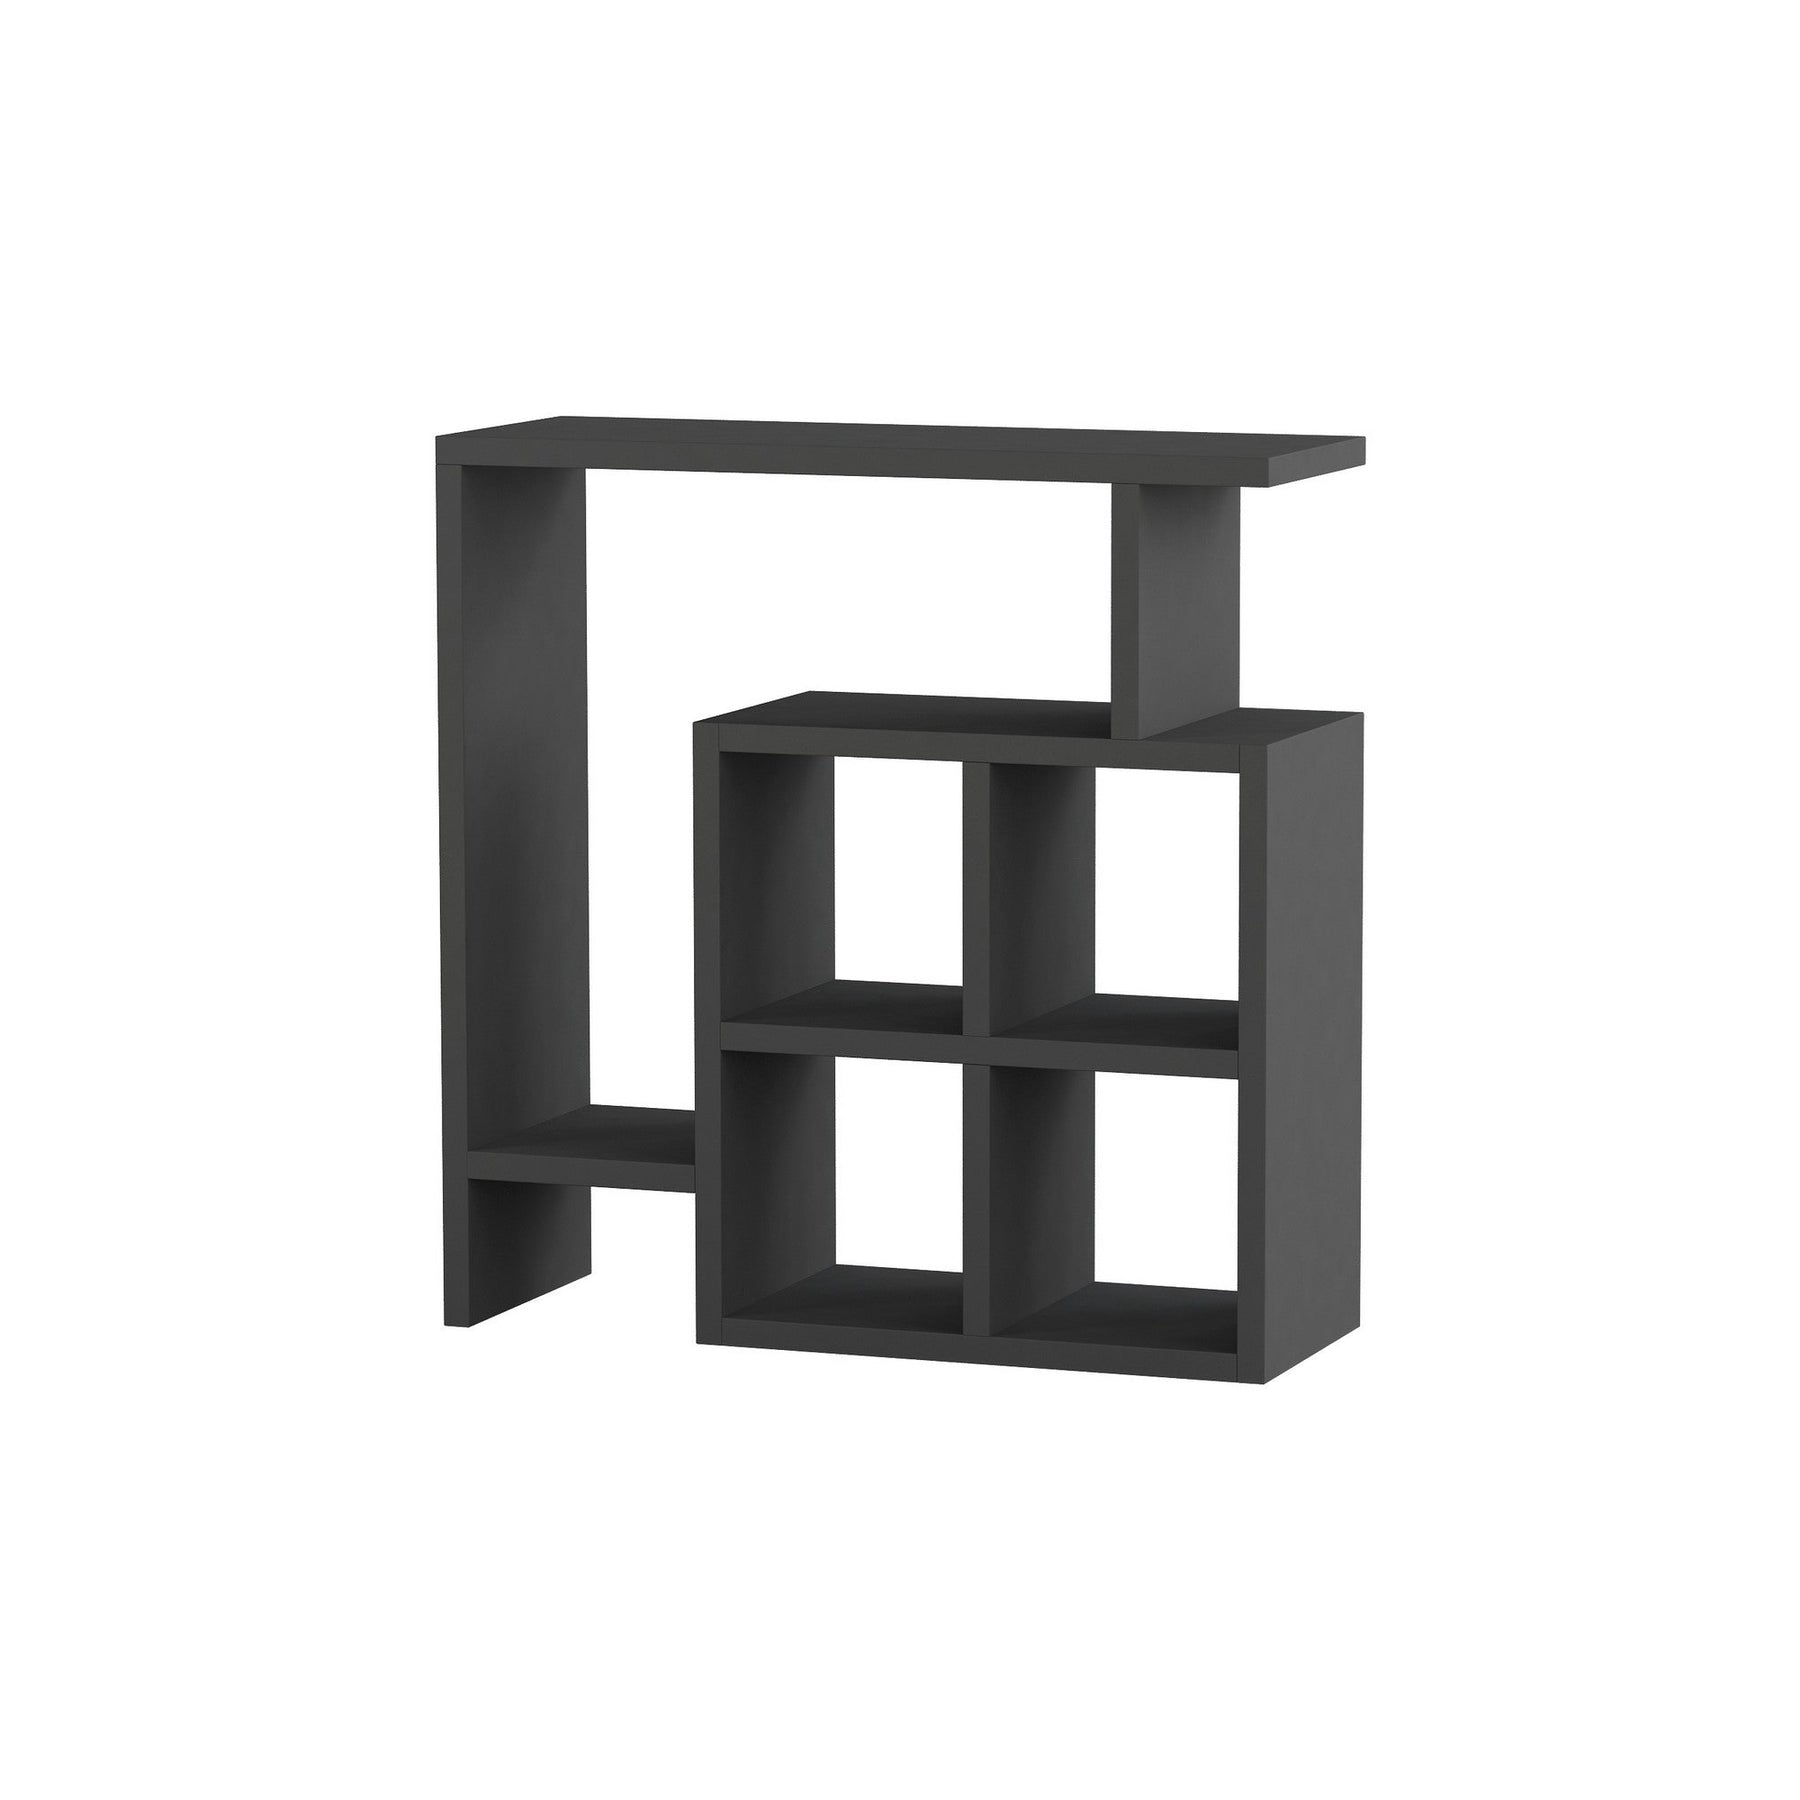 Masuta Mondri, gri antracit, PAL, 55x20x57 cm